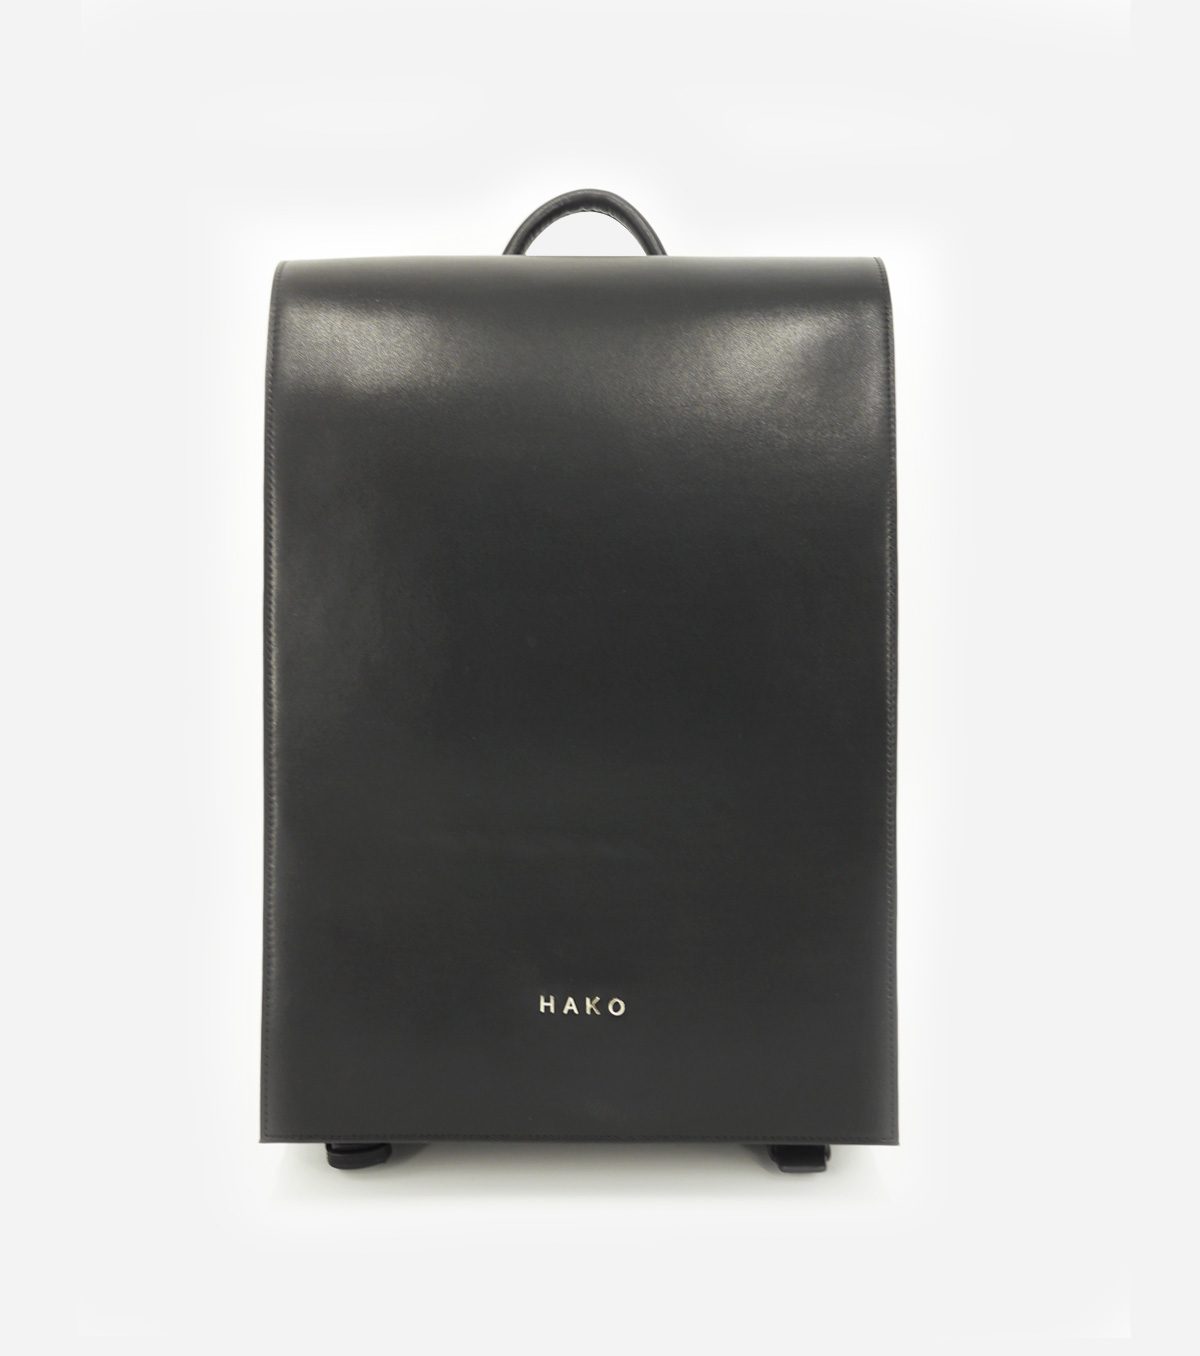 The Hako One Japanese Randoseru Bag